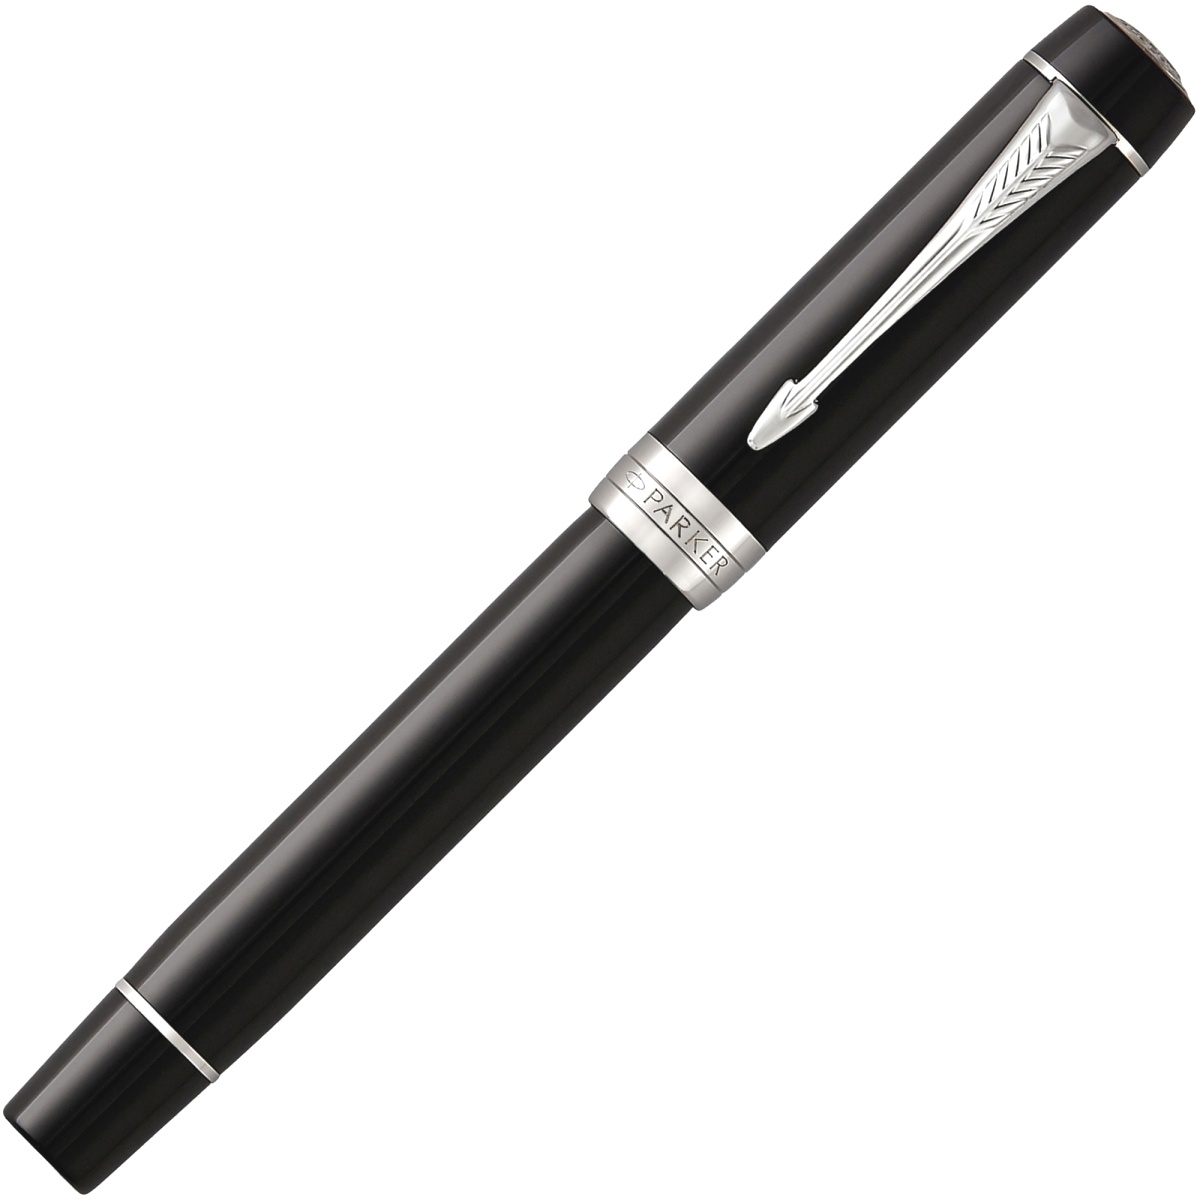  Перьевая ручка Parker Duofold Classic International F74, Black CT (Перо F), фото 2